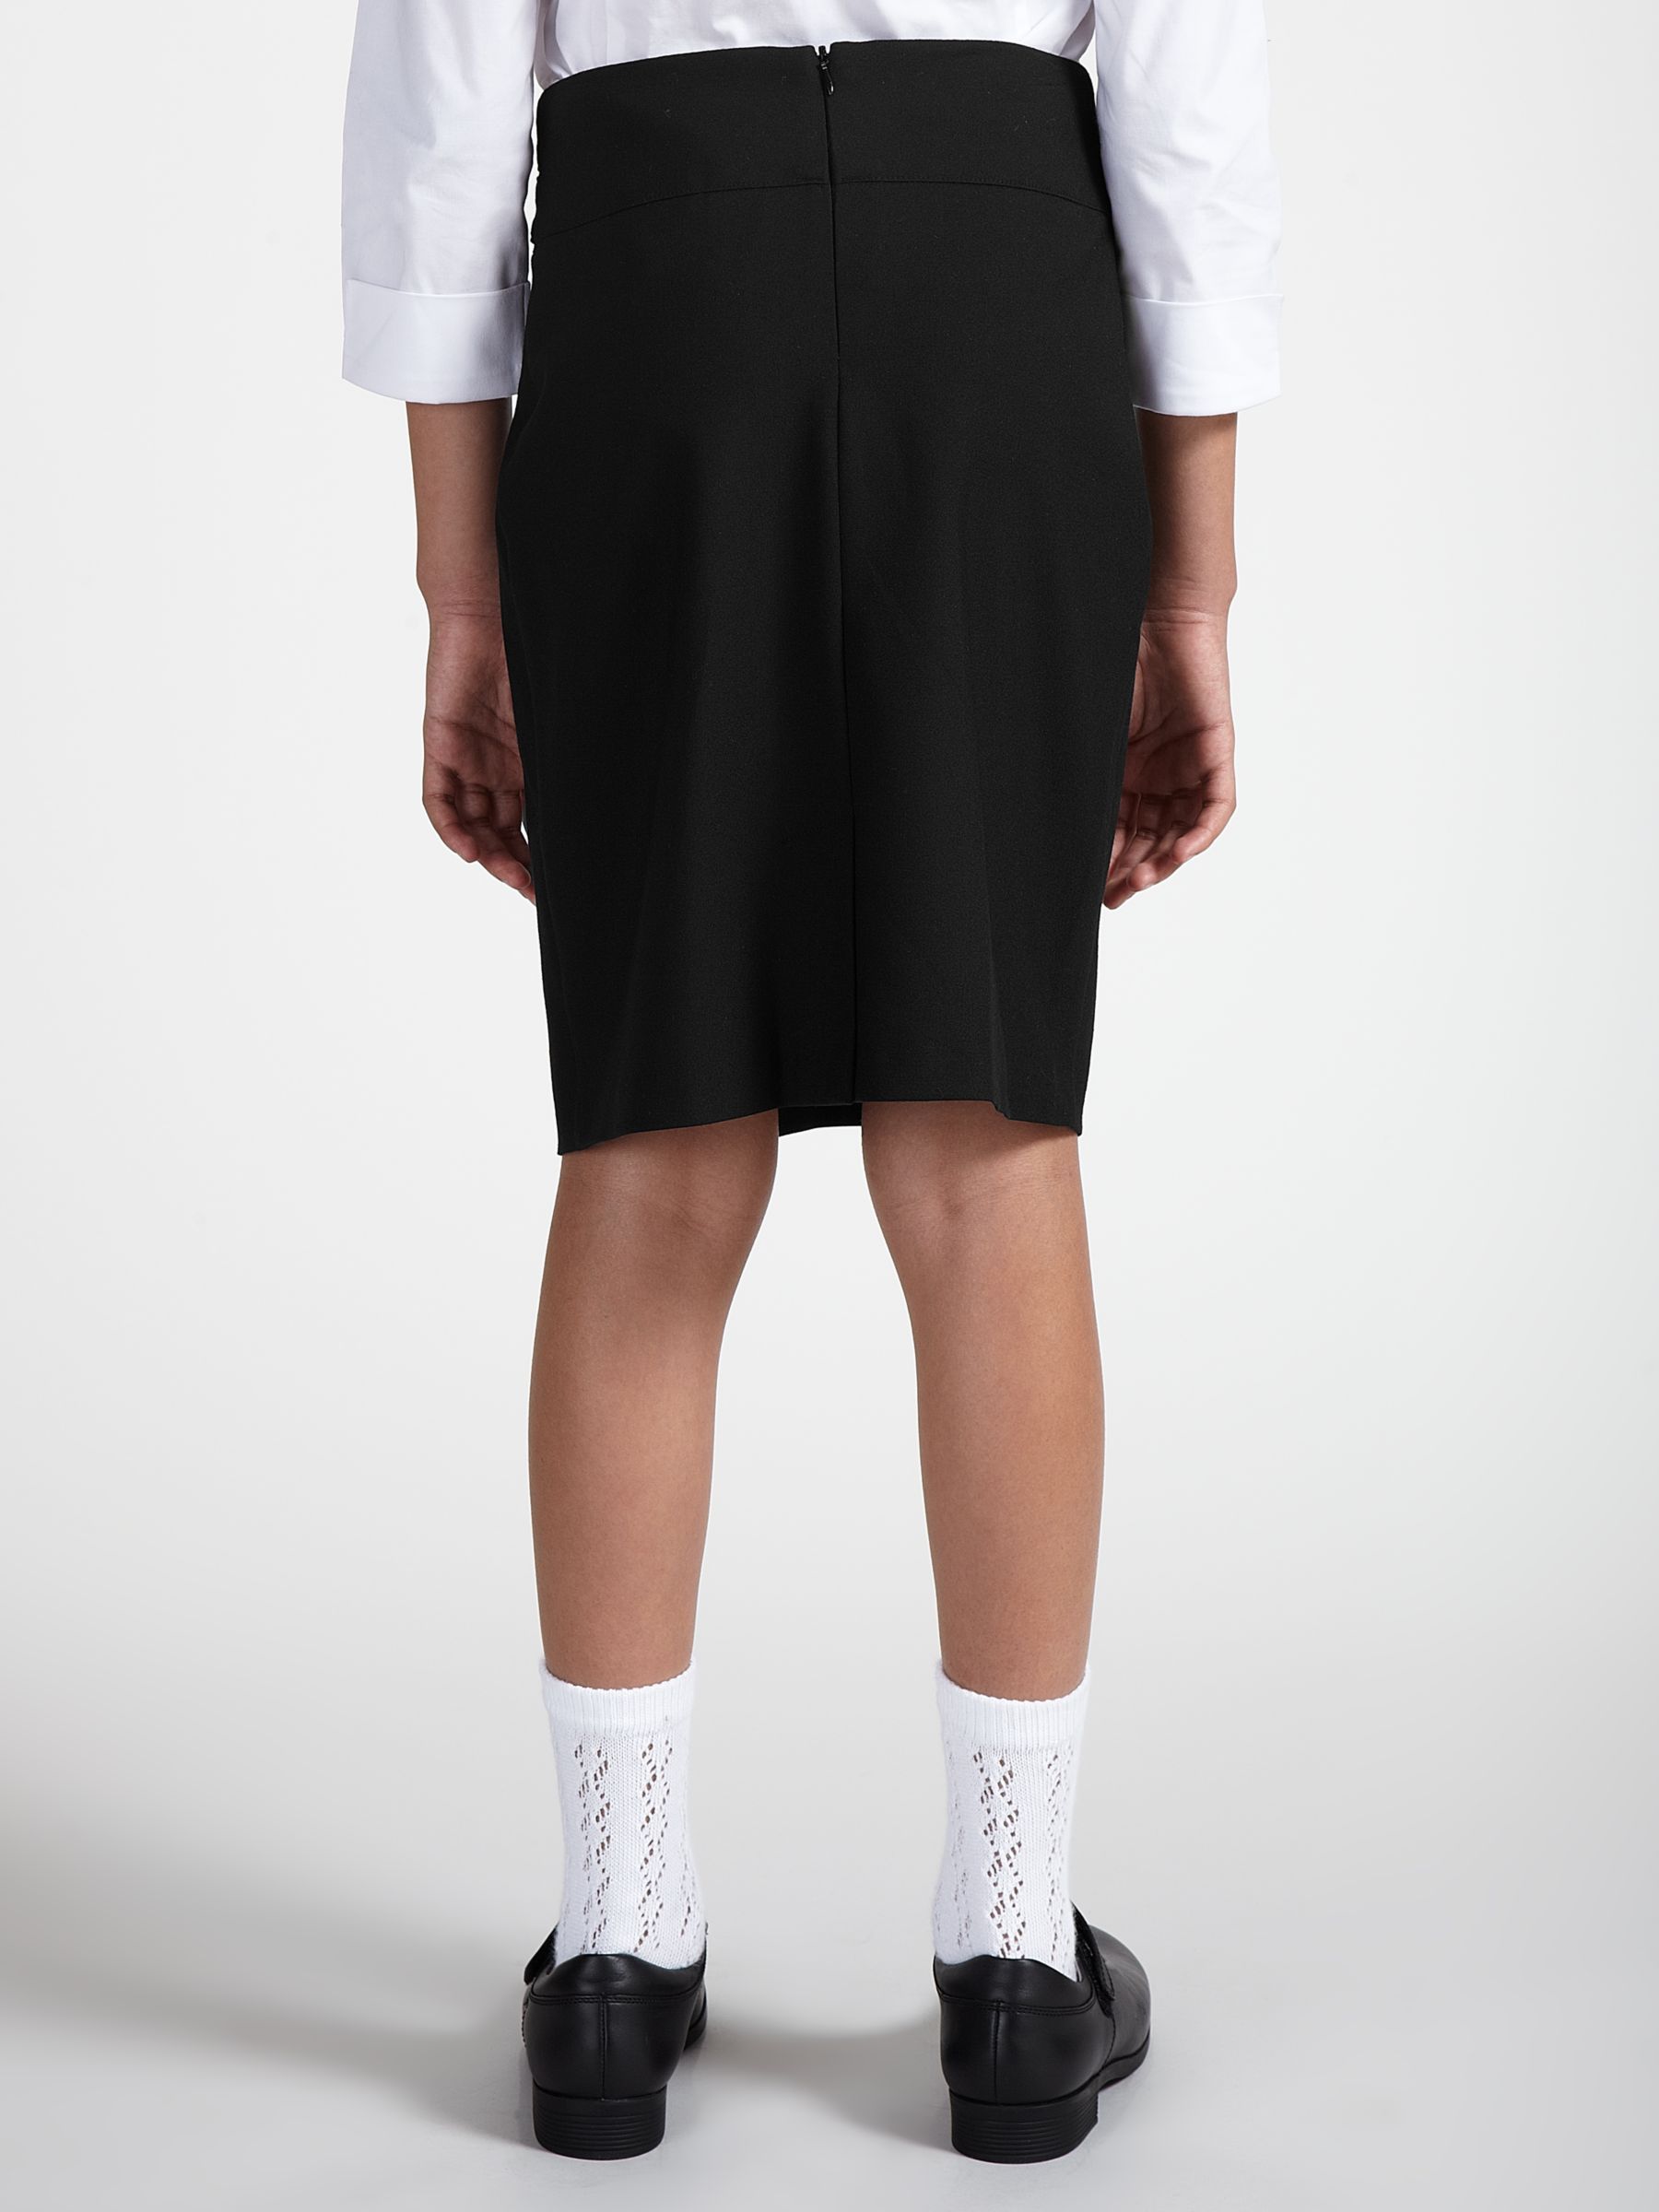 Buy John Lewis Girls' Pencil School Skirt, Black | John Lewis